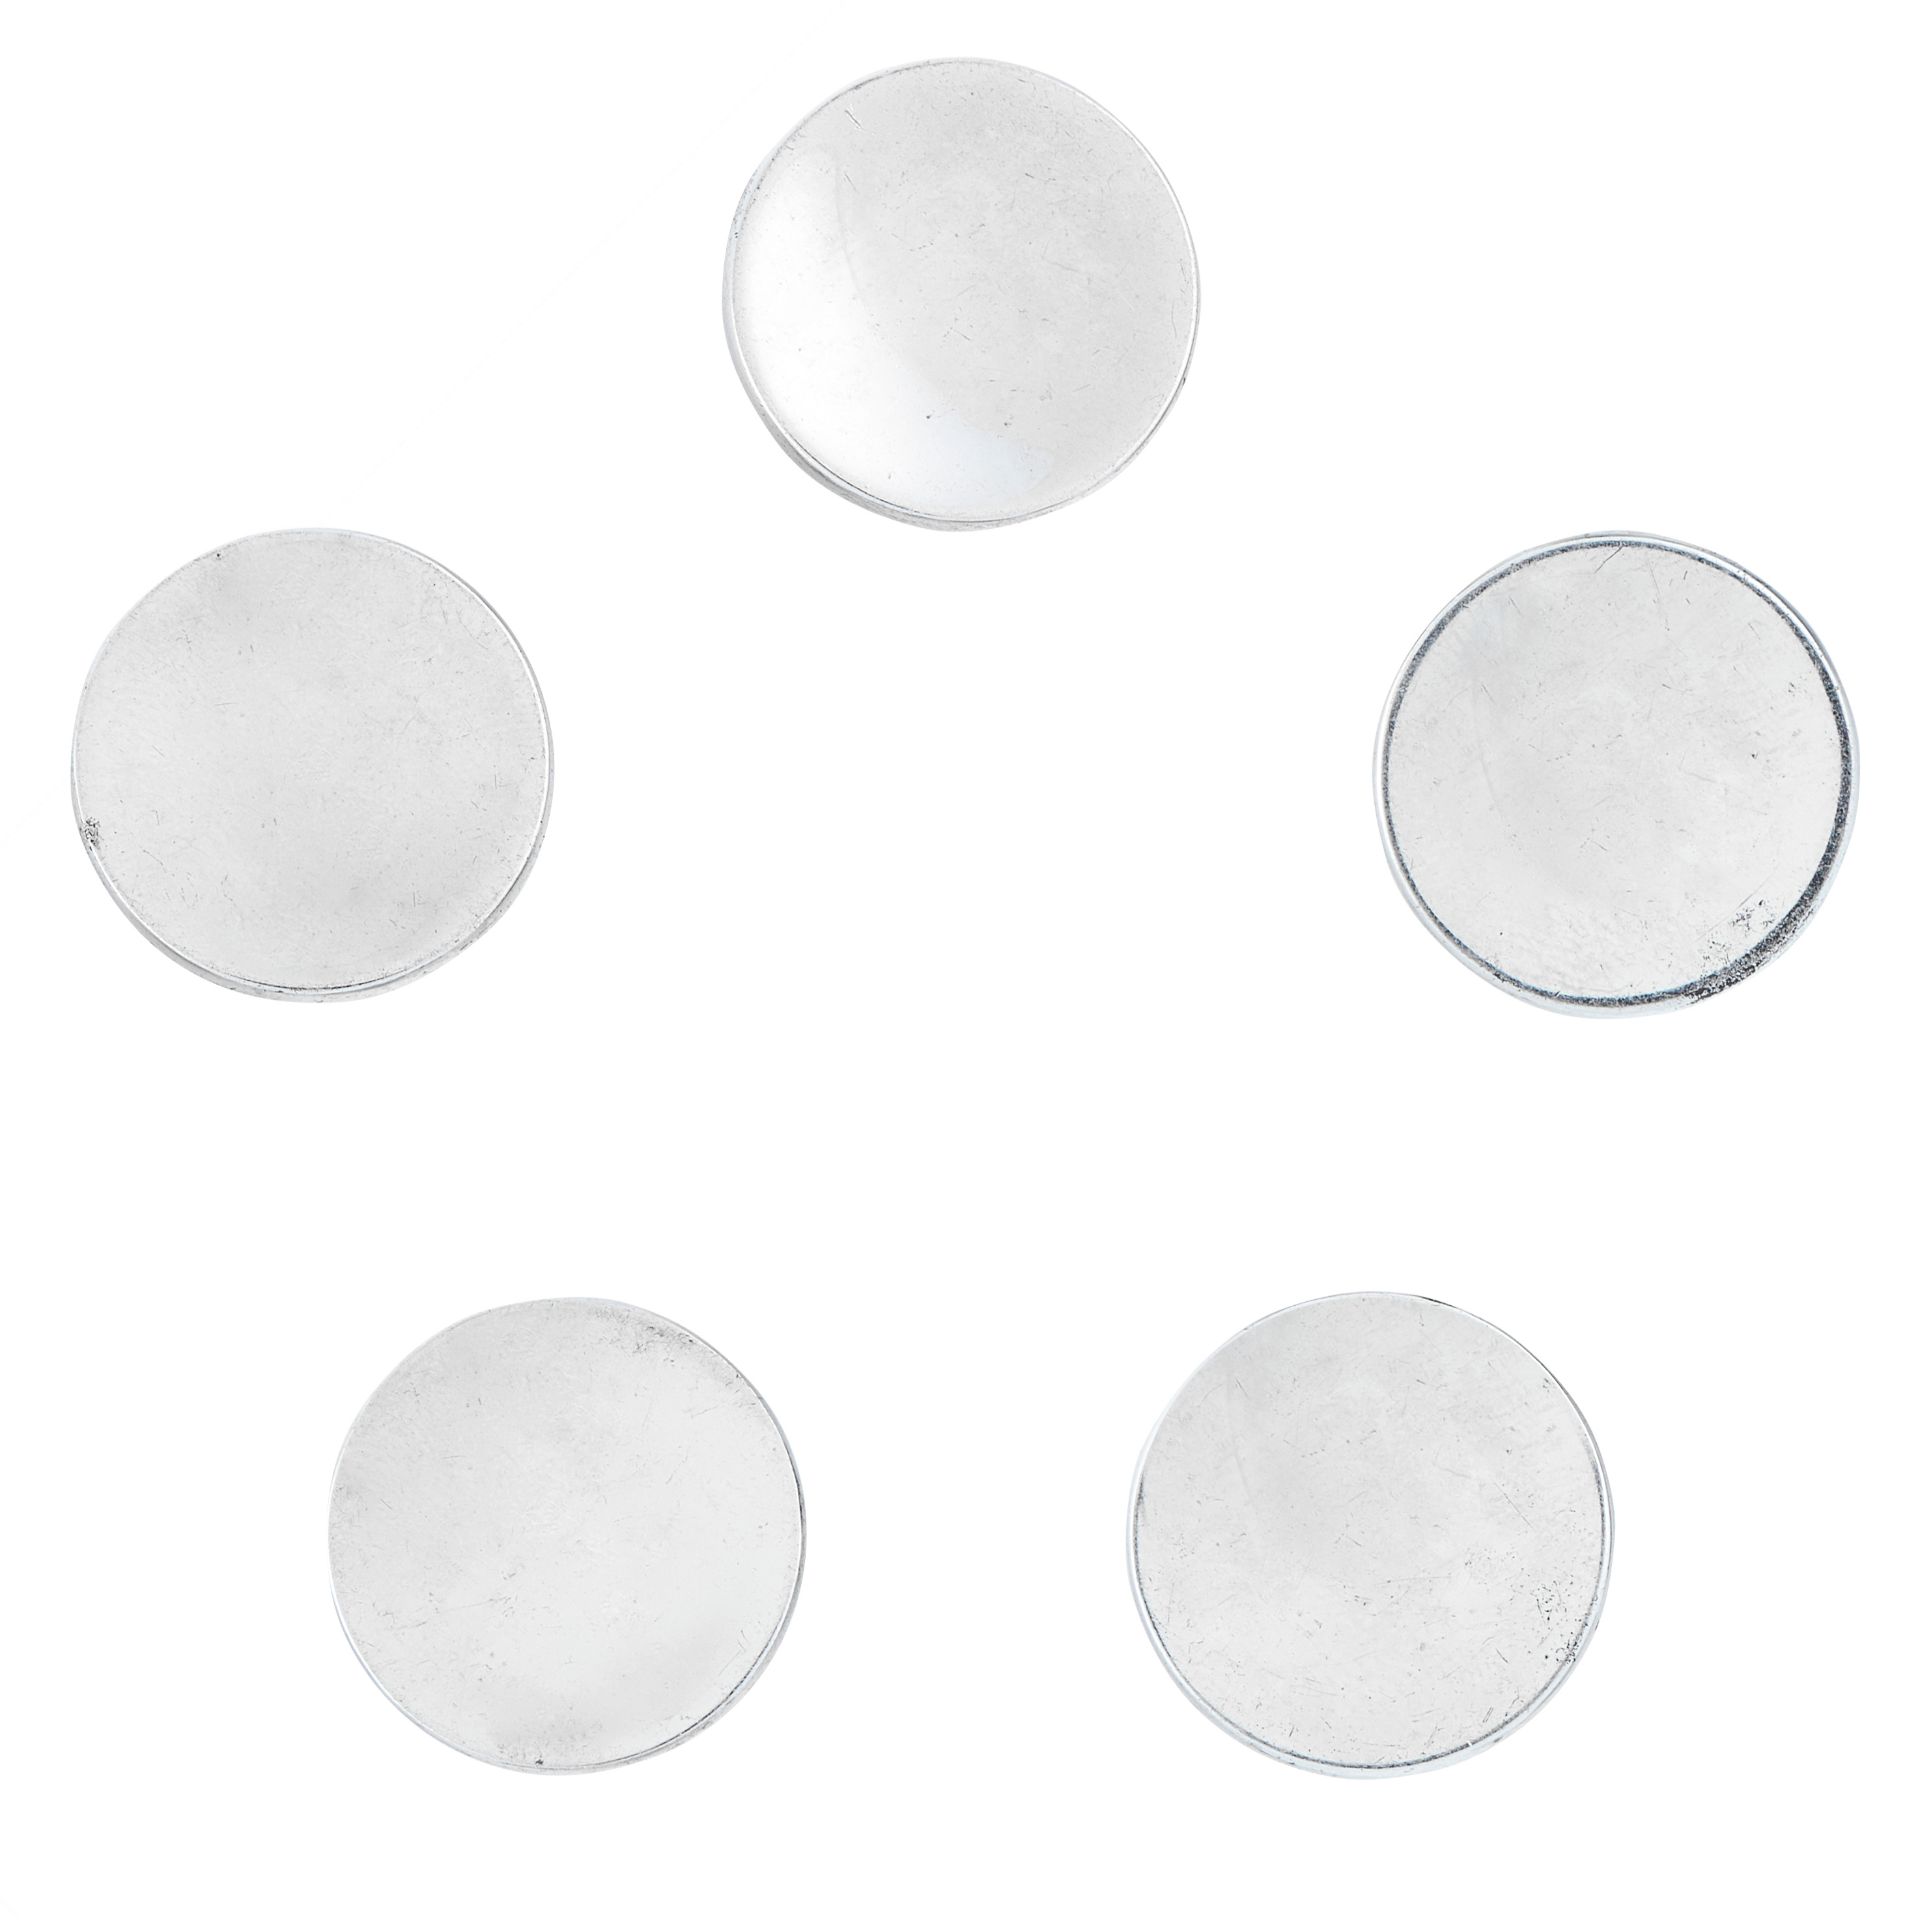 FIVE VINTAGE BUTTONS, GEORG JENSEN in silver, design number 103, each of plain circular design